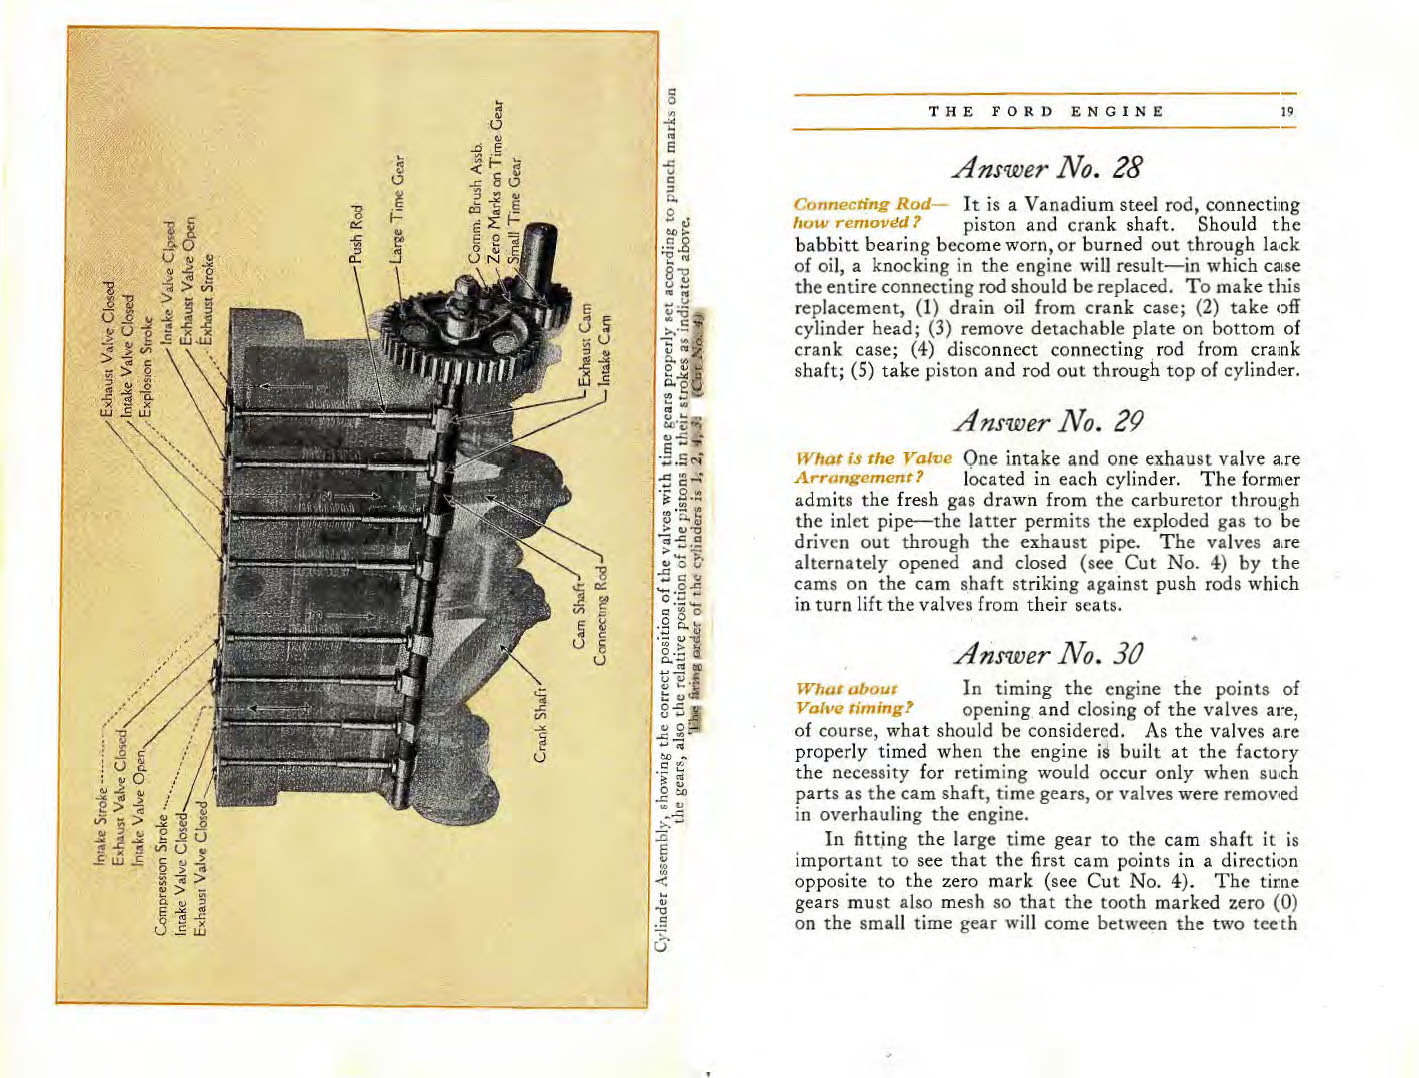 n_1915 Ford Owners Manual-18-19.jpg